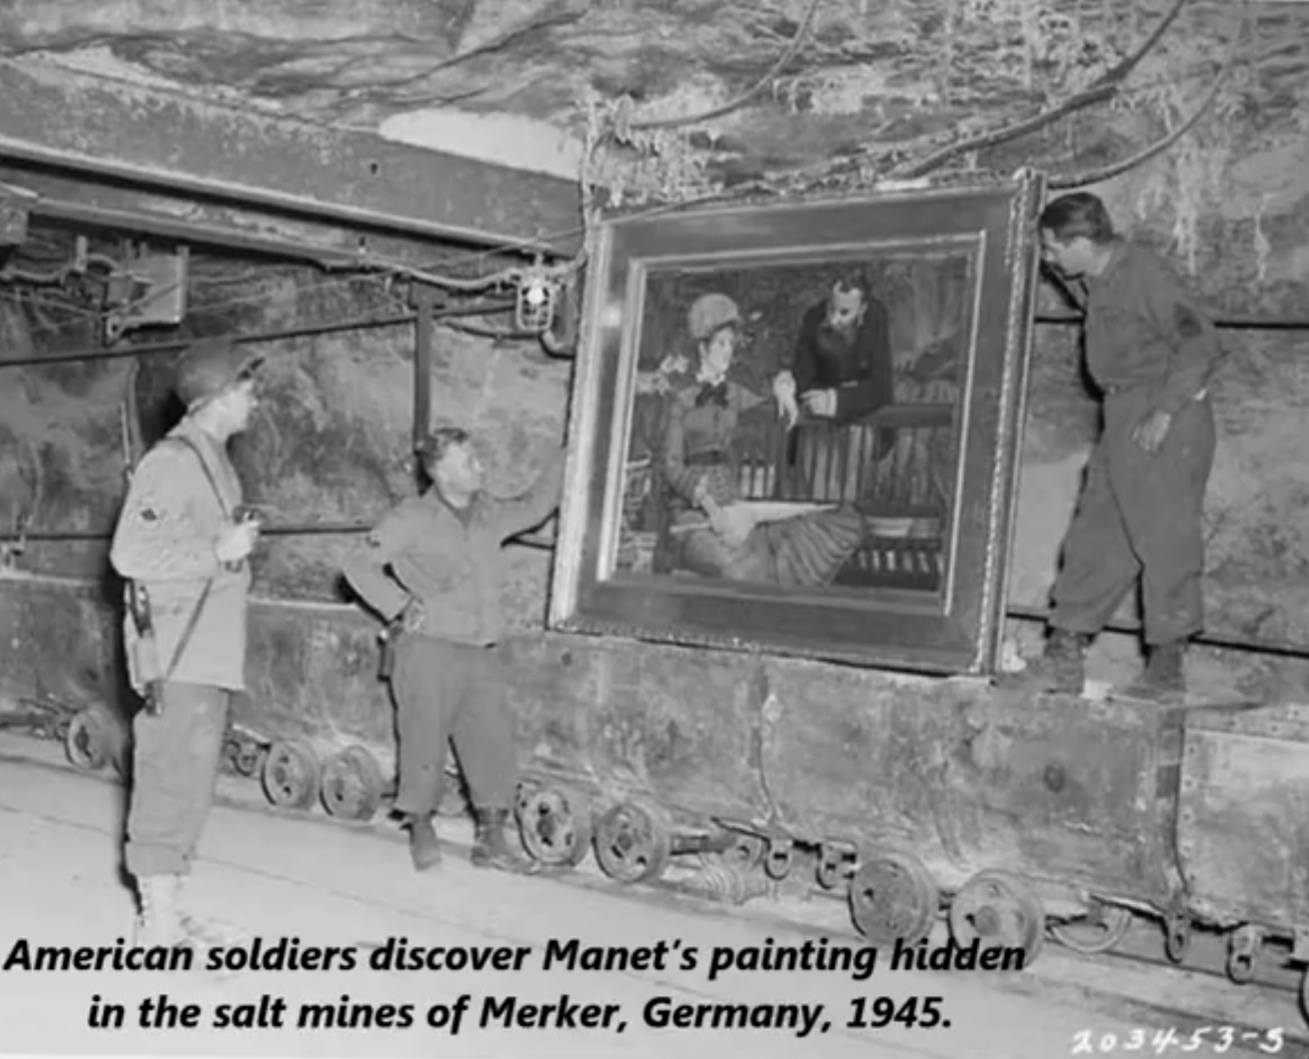 nazi art looting during world war ii - American soldiers discover Manet's painting hidden in the salt mines of Merker, Germany, 1945. 2034535